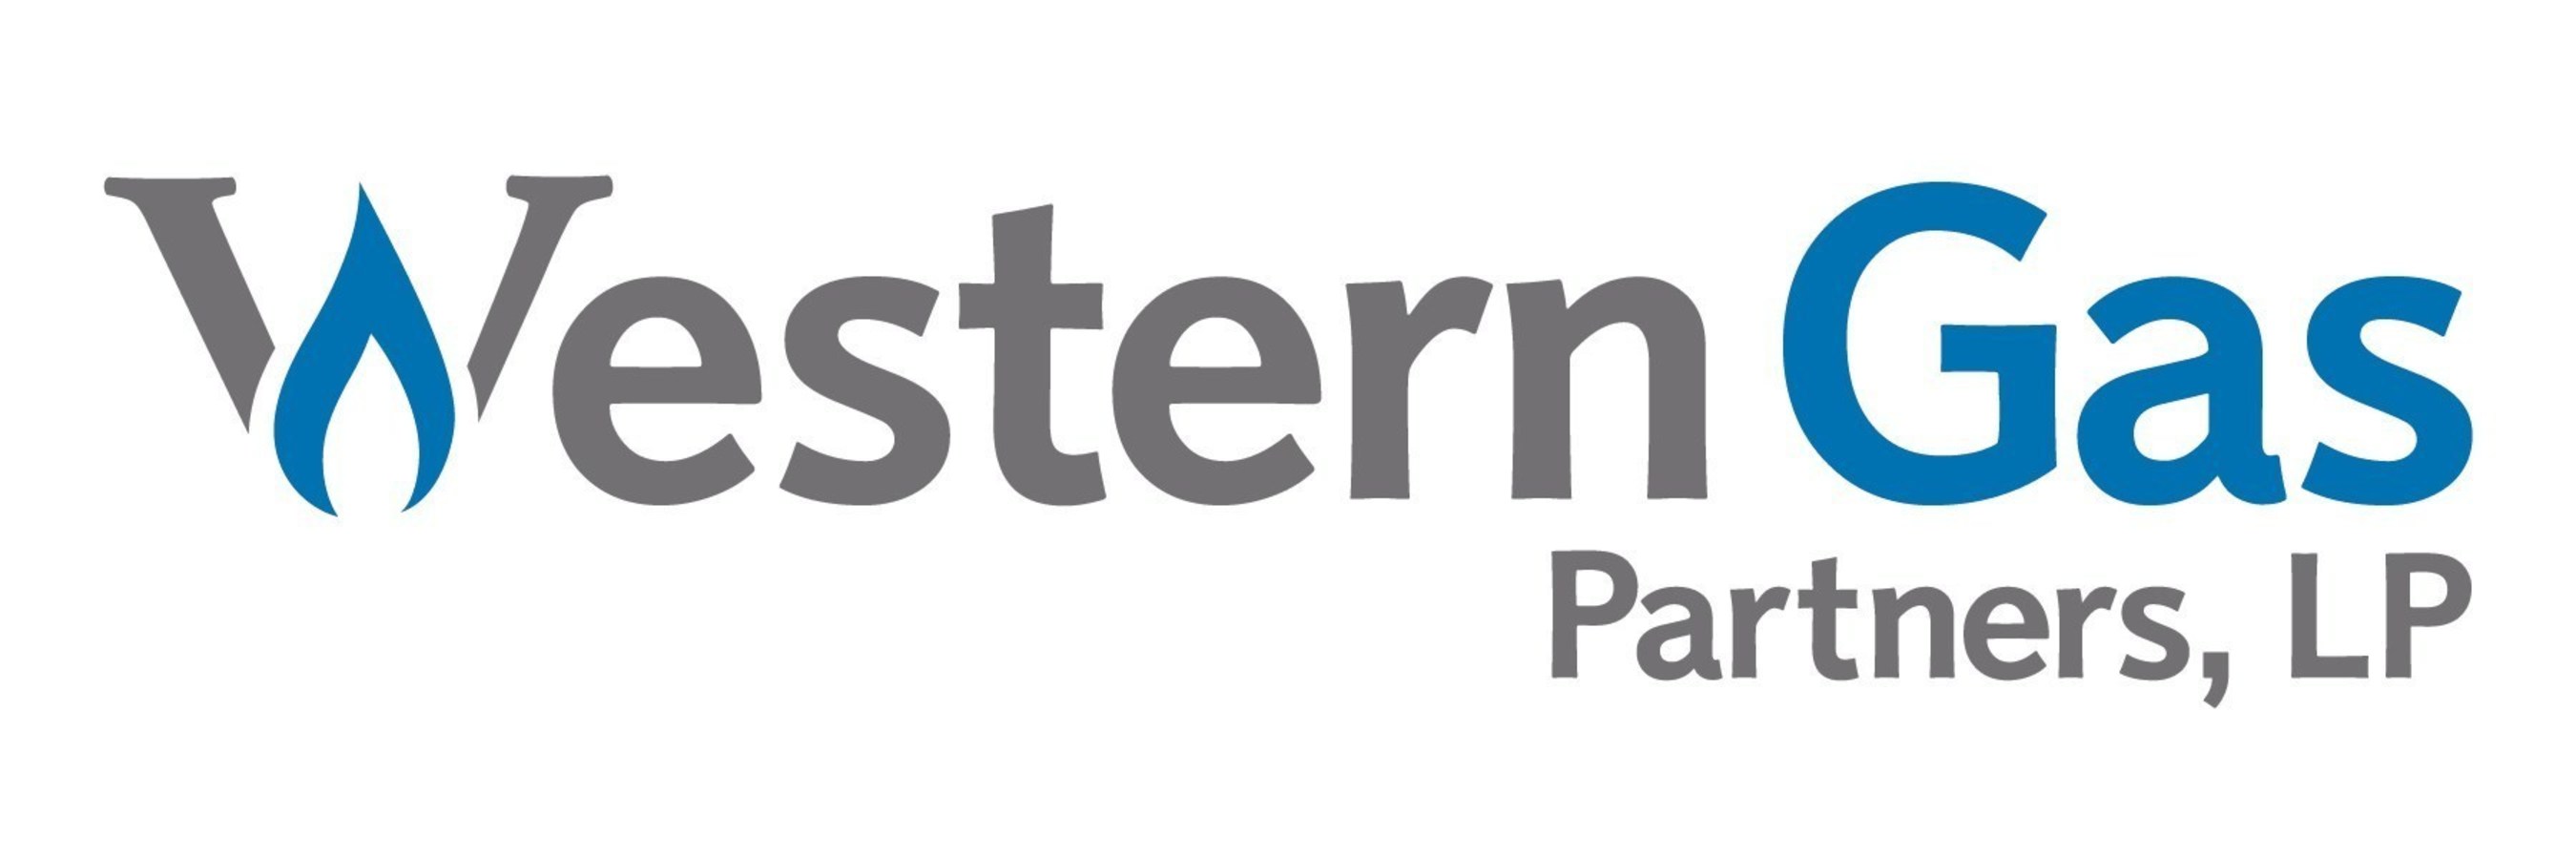 Western Gas Partners (PRNewsFoto/Western Gas Partners, LP)